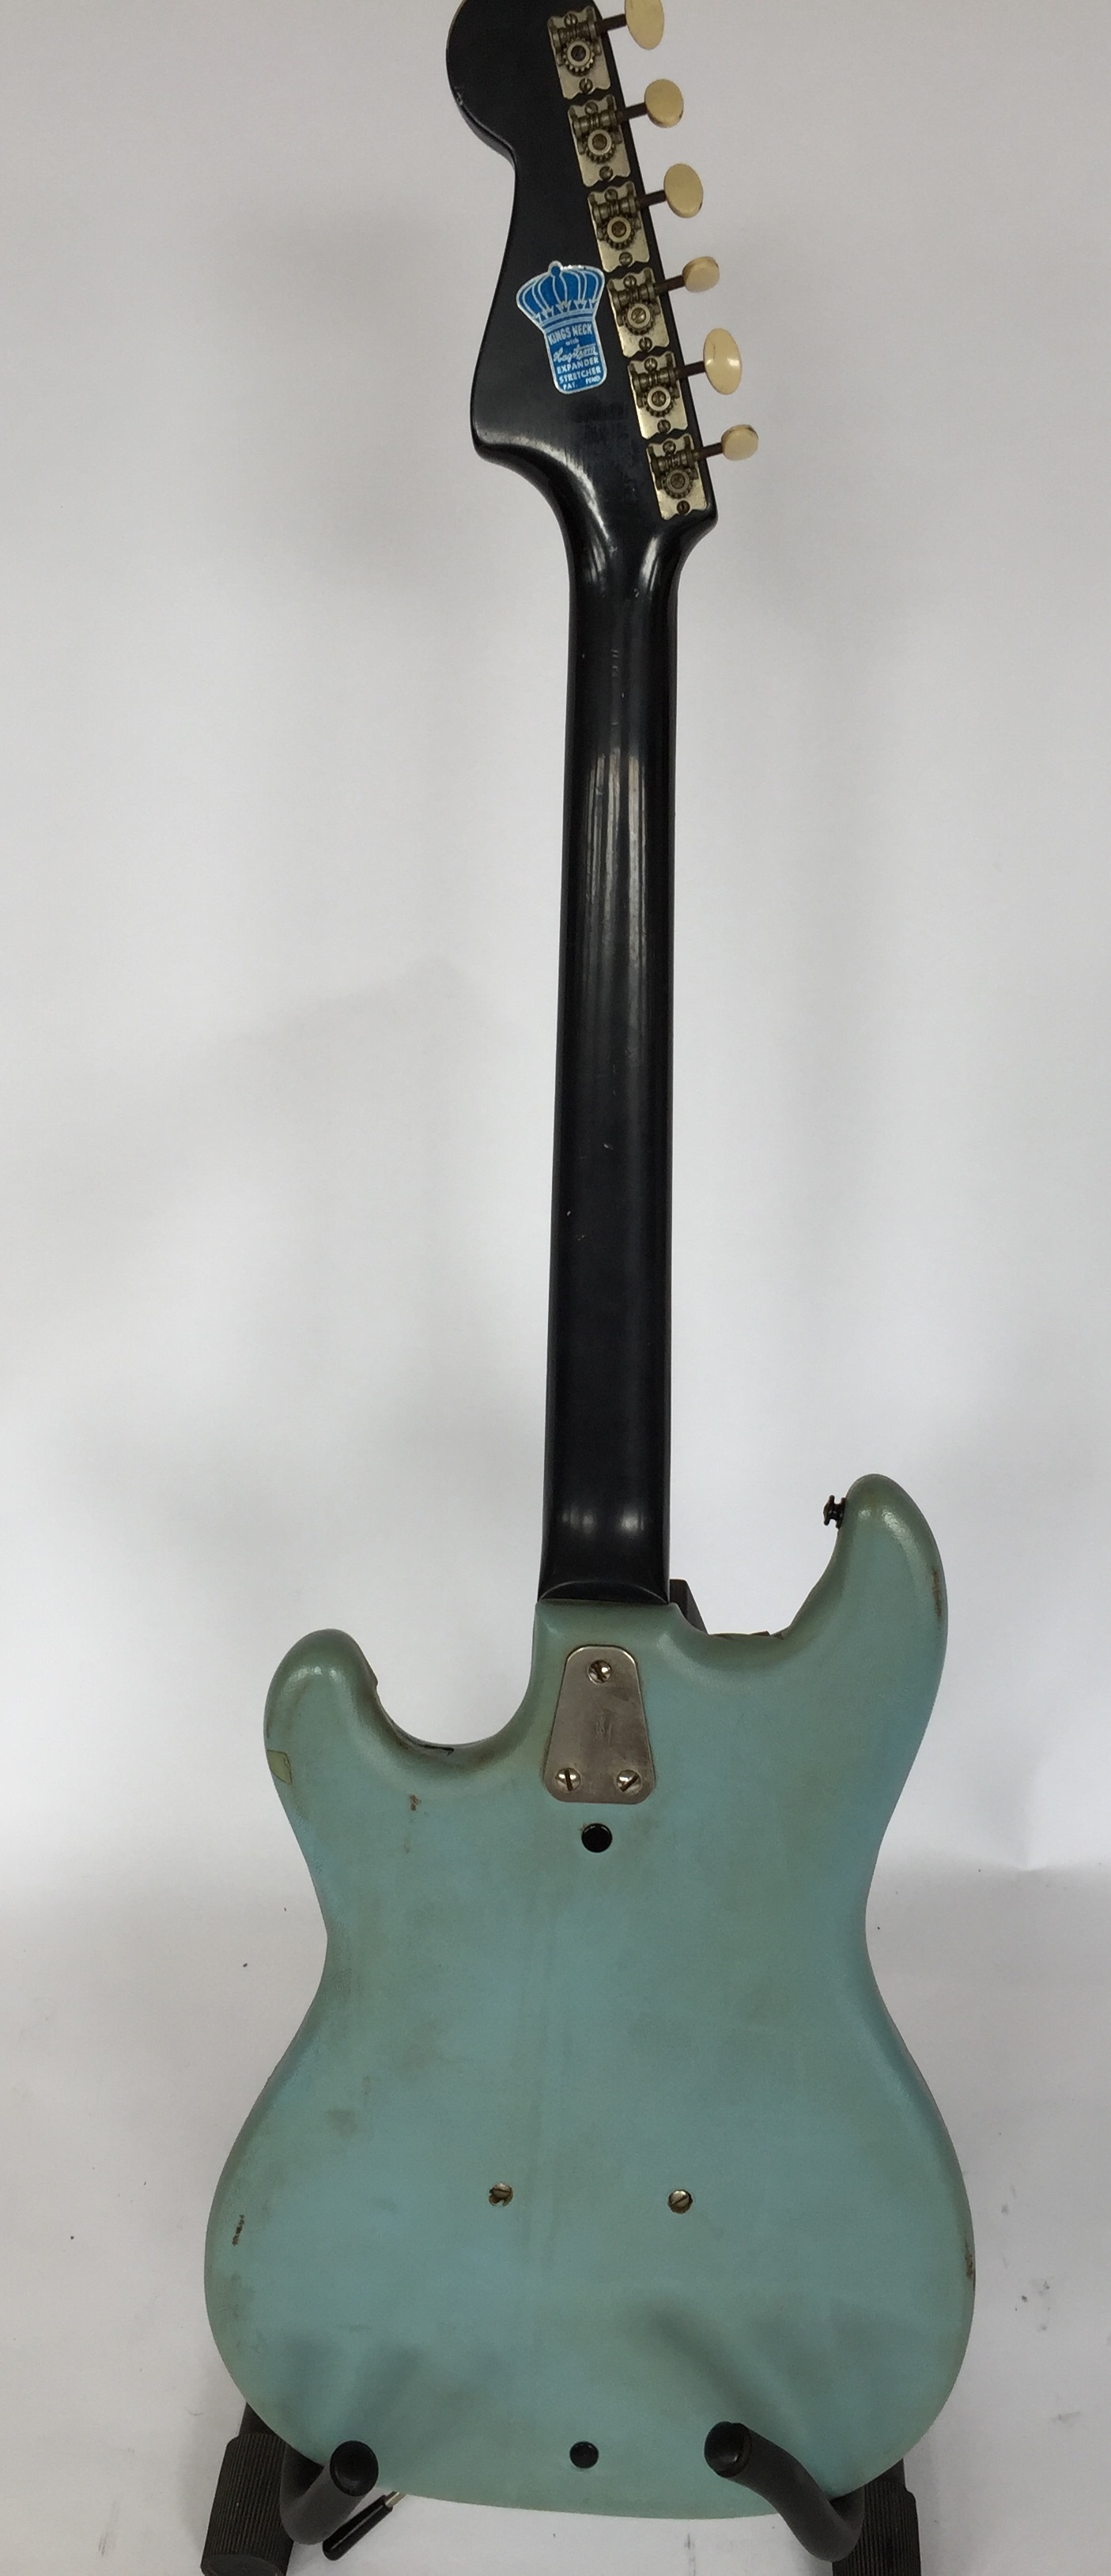 HAGSTROM FUTURAMA III 1964 BLUE - serial 603965. Hagstrom KENT electric guitar made in 1964. - Image 6 of 9